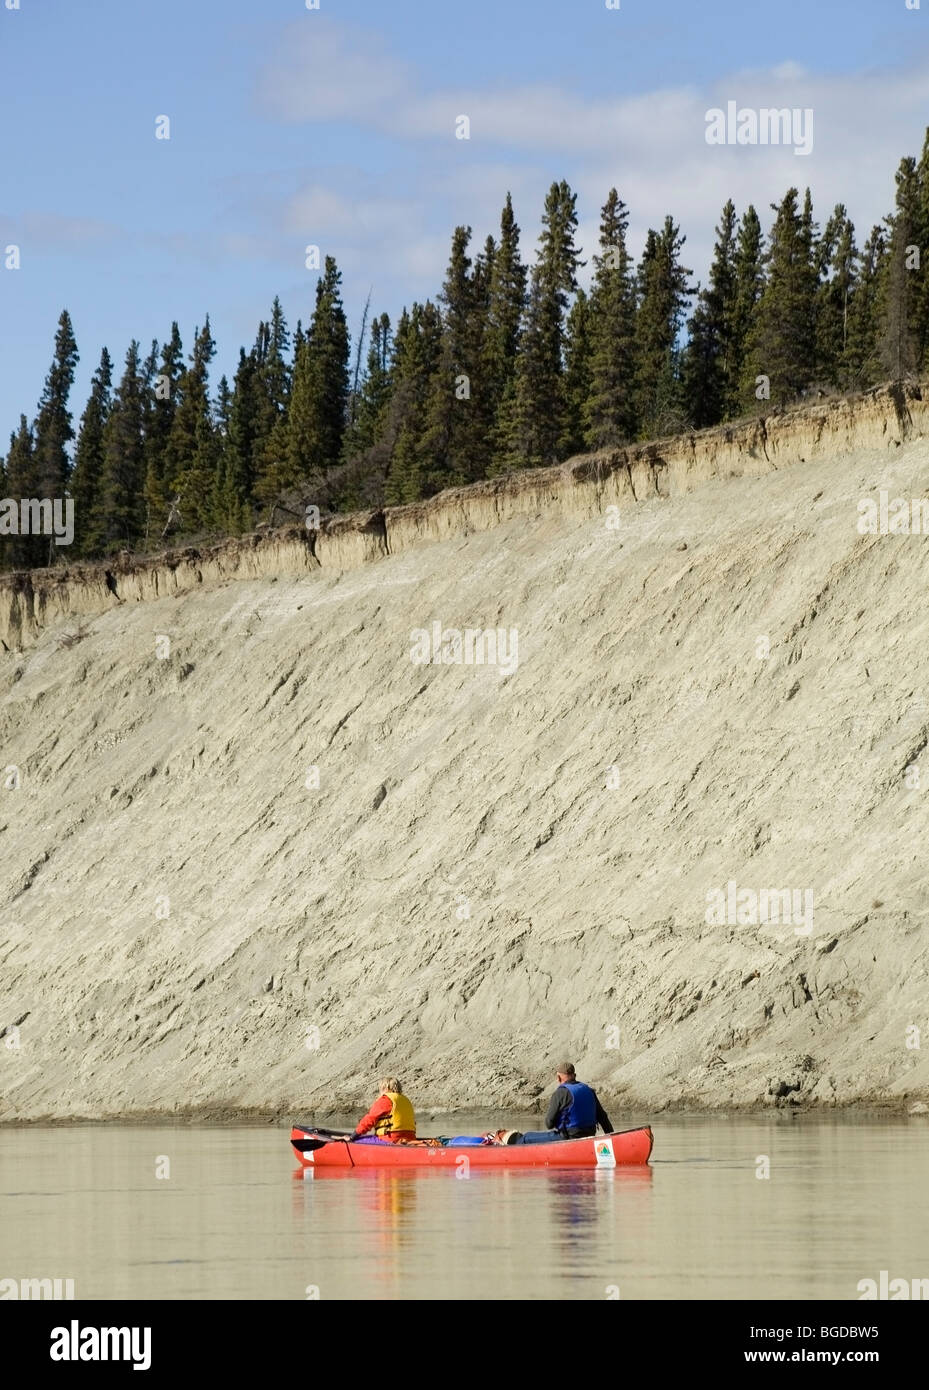 Couple, man and woman in a canoe, canoeing, high cut bank, erosion behind, Takhini River, Yukon Territory, Canada Stock Photo